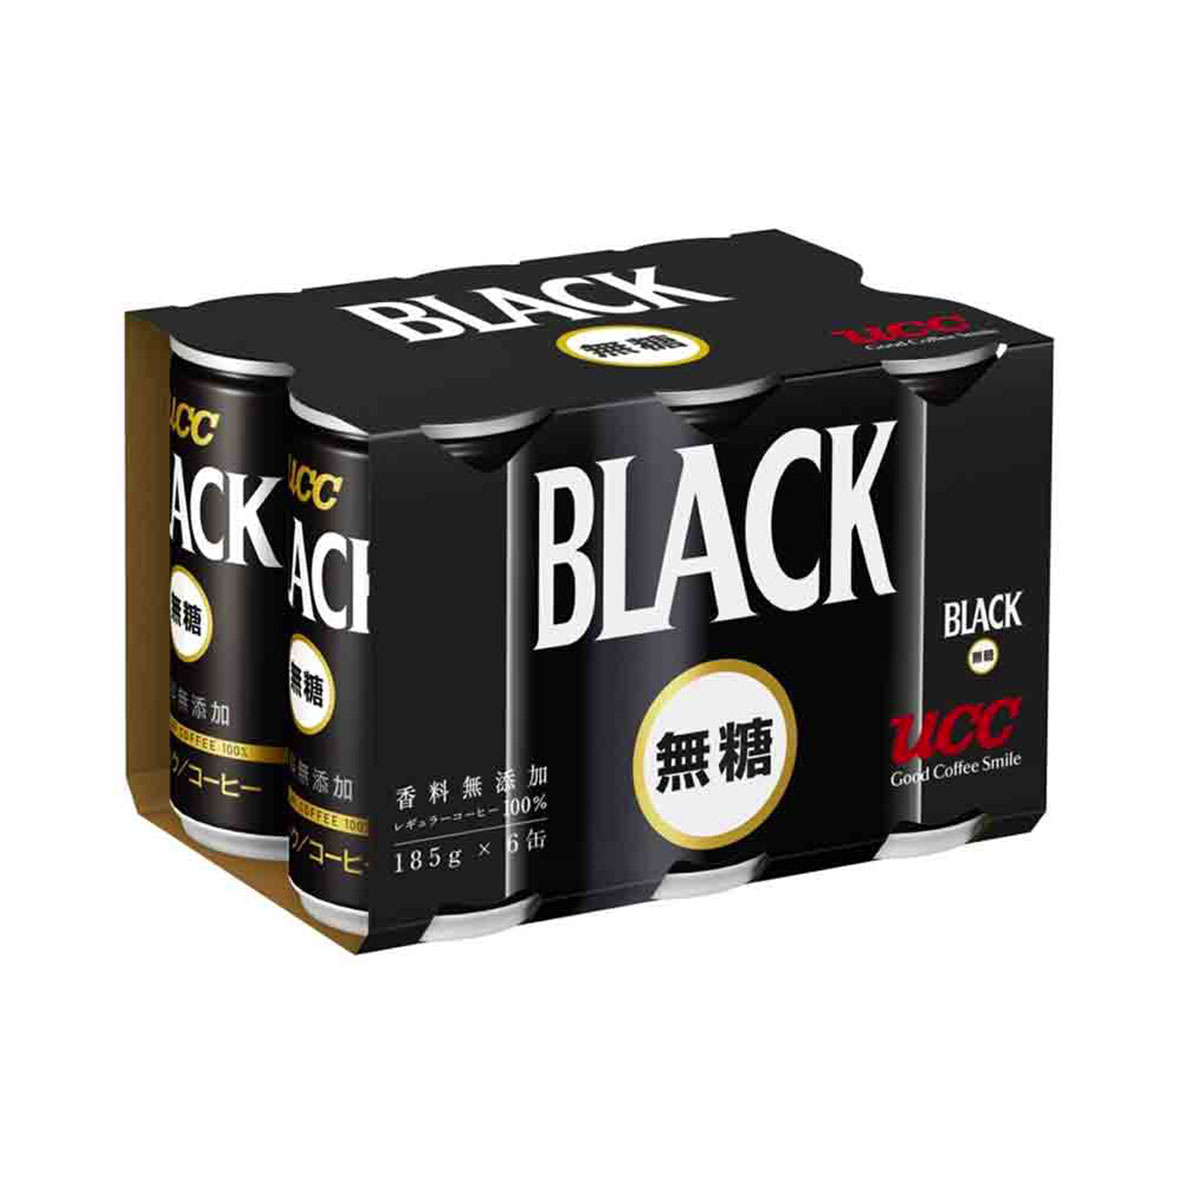 UCC Black Unsweetened Coffee Pack ( 6 Packs )